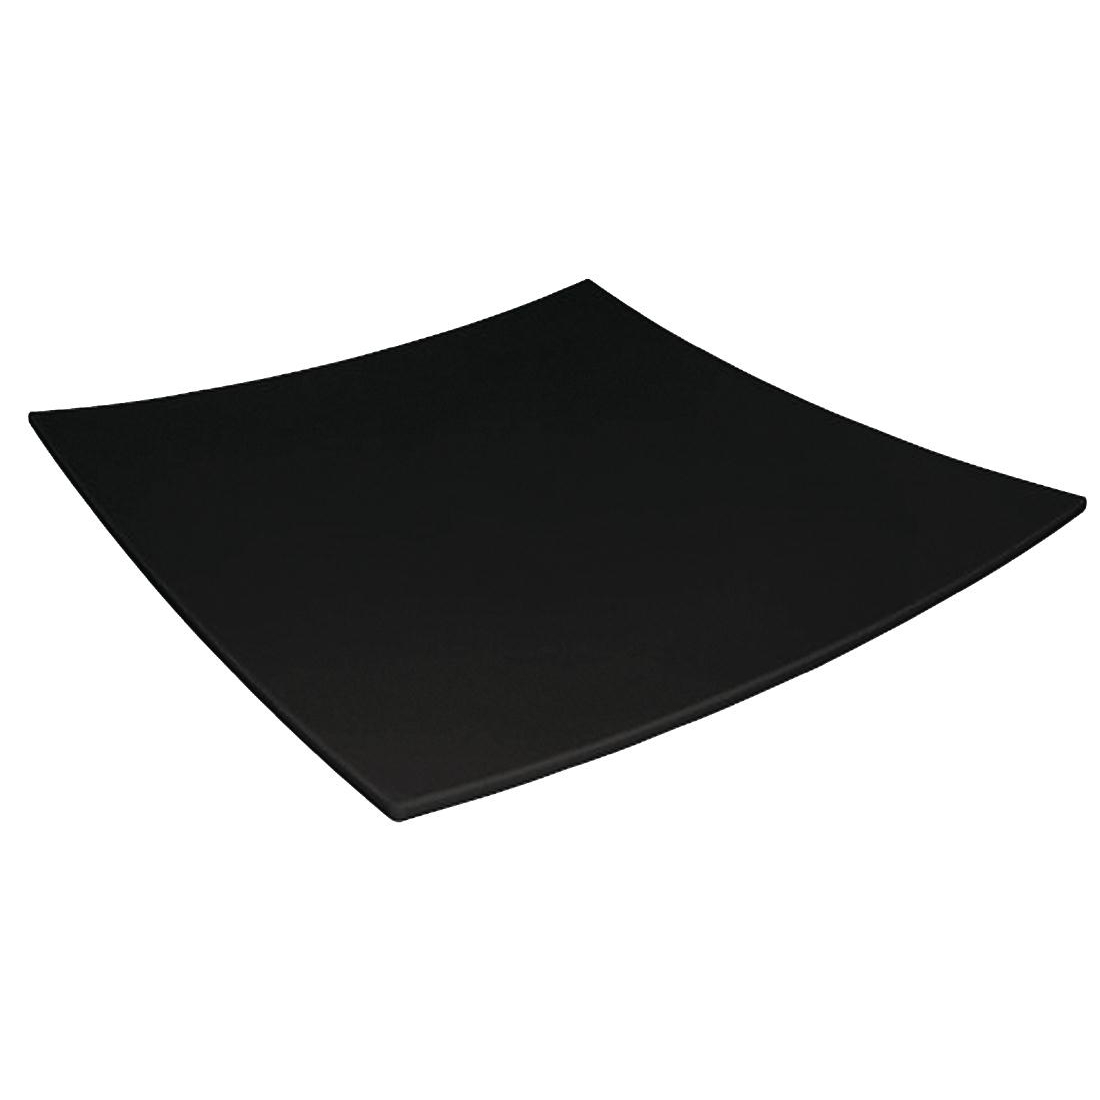 Curved Square Melamine Plate Black 400mm